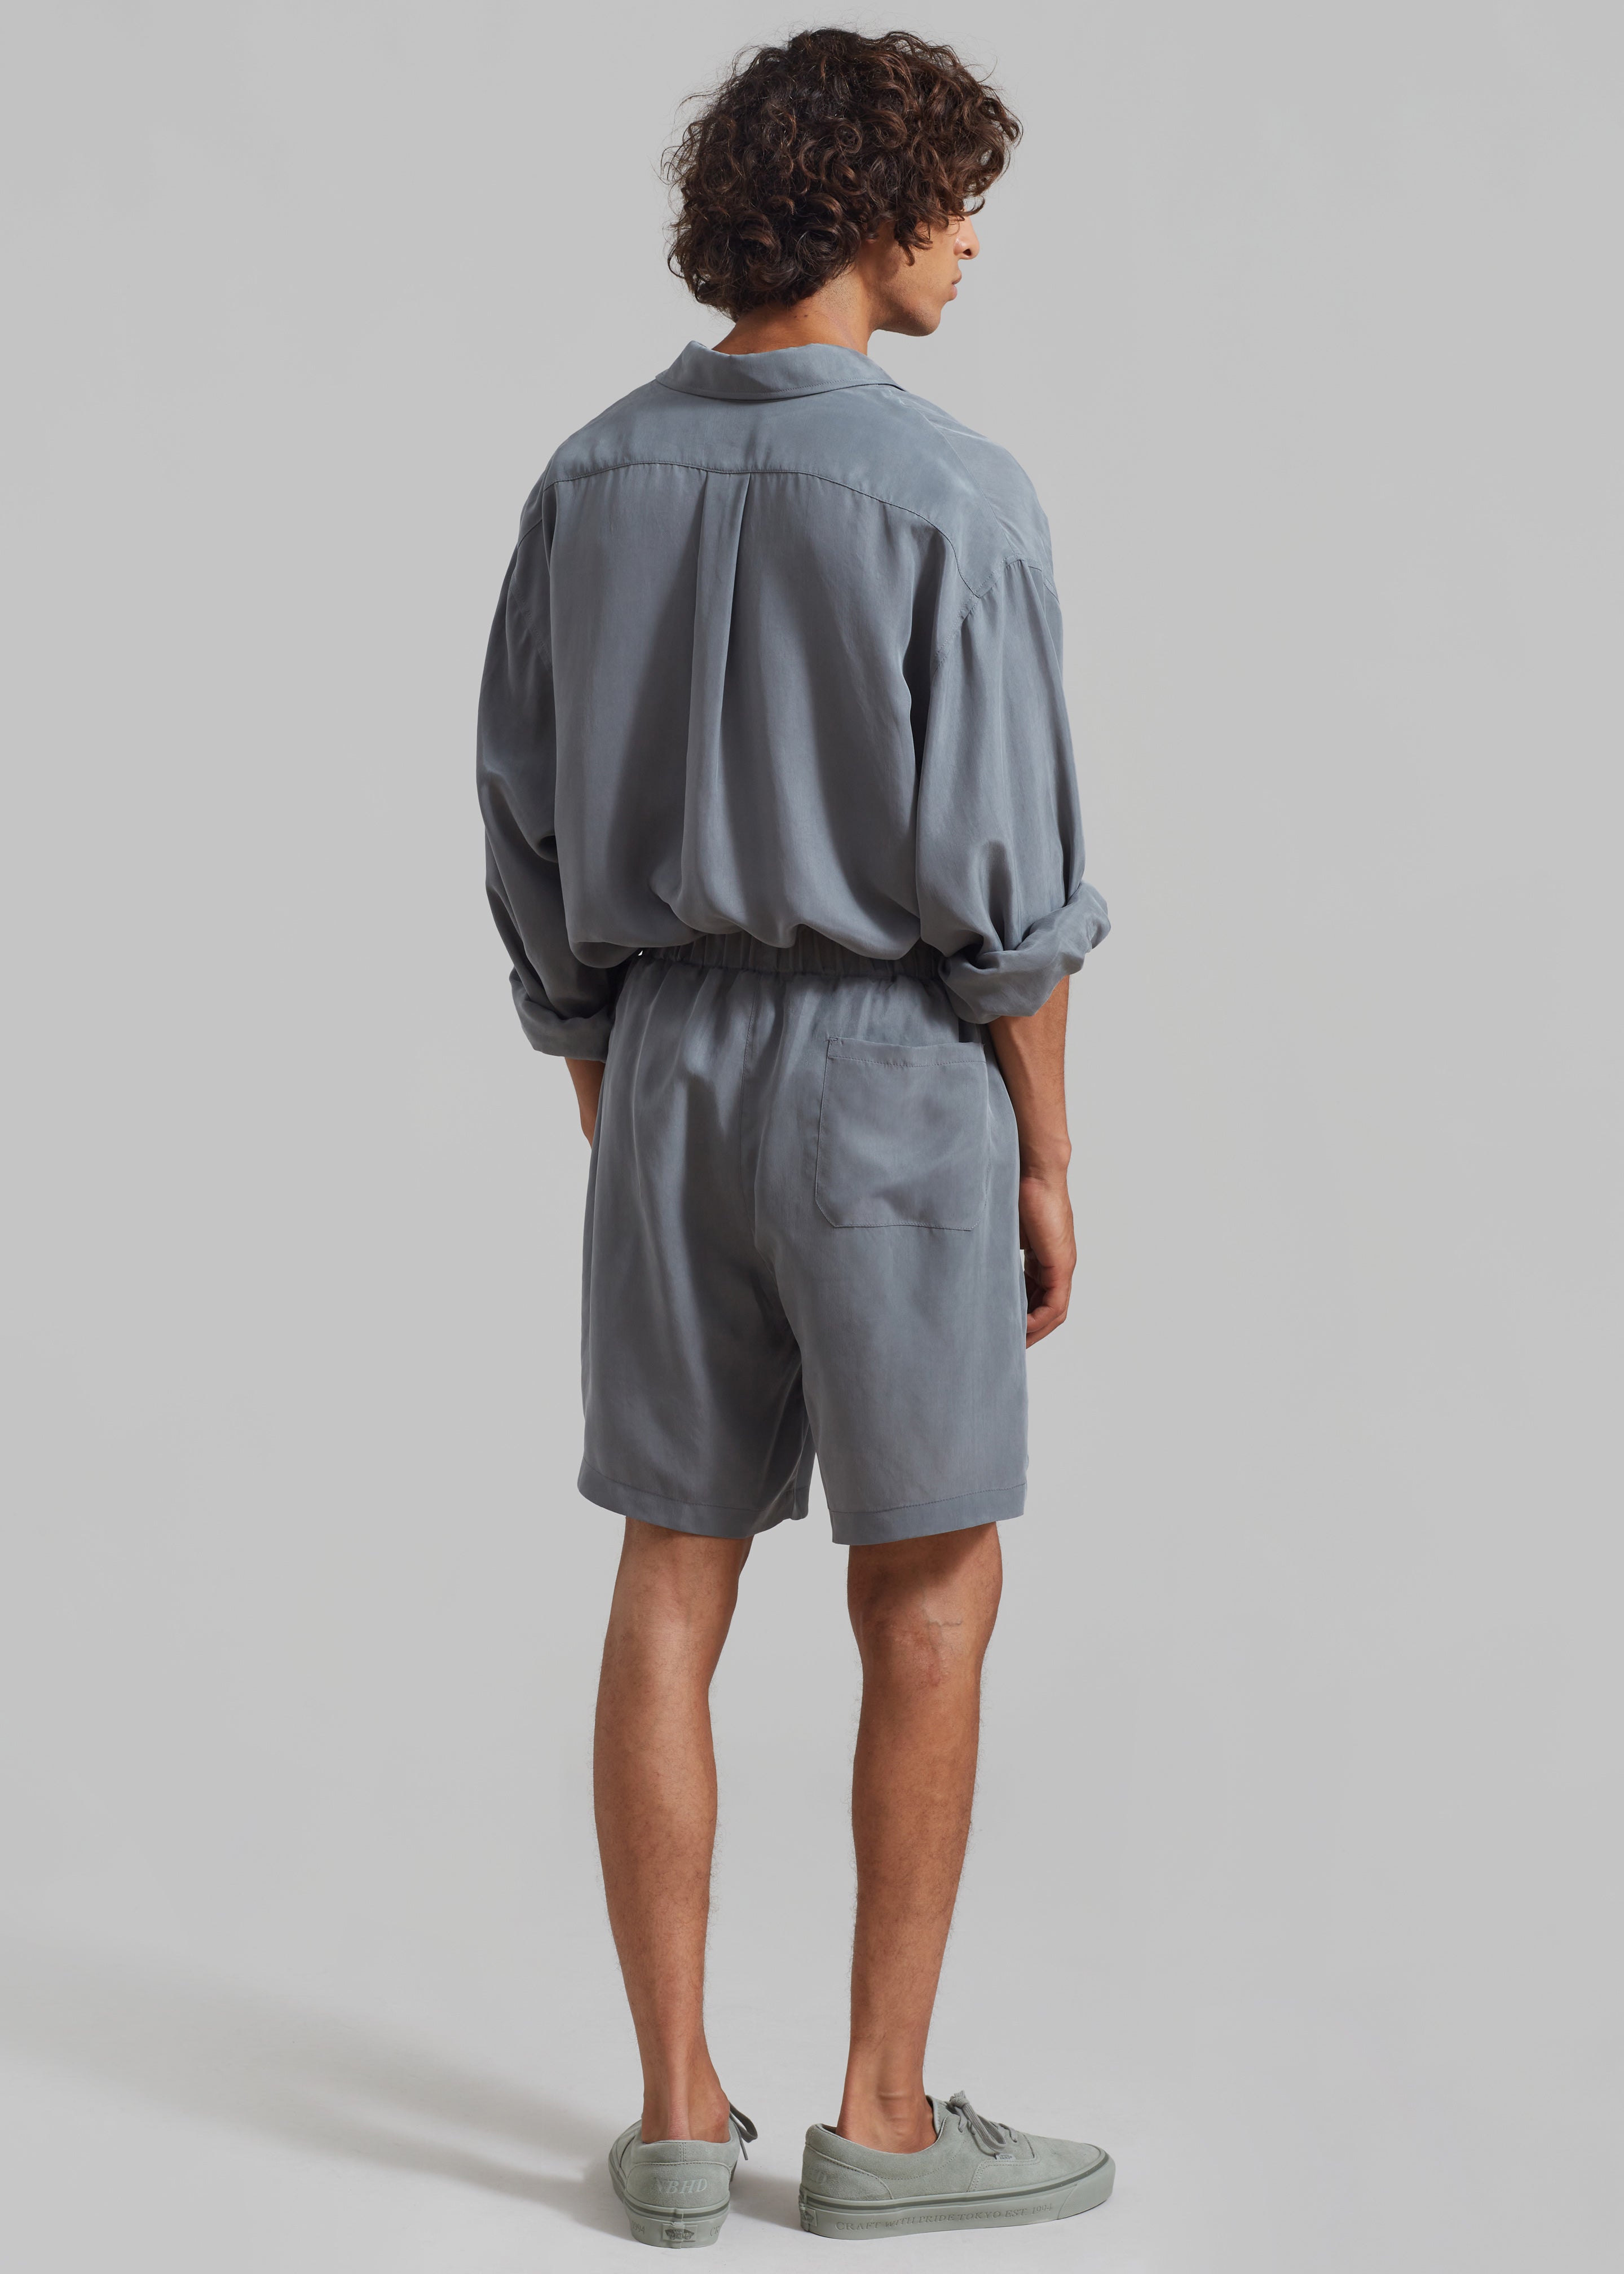 Leland Silky Boxer Shorts - Charcoal - 6